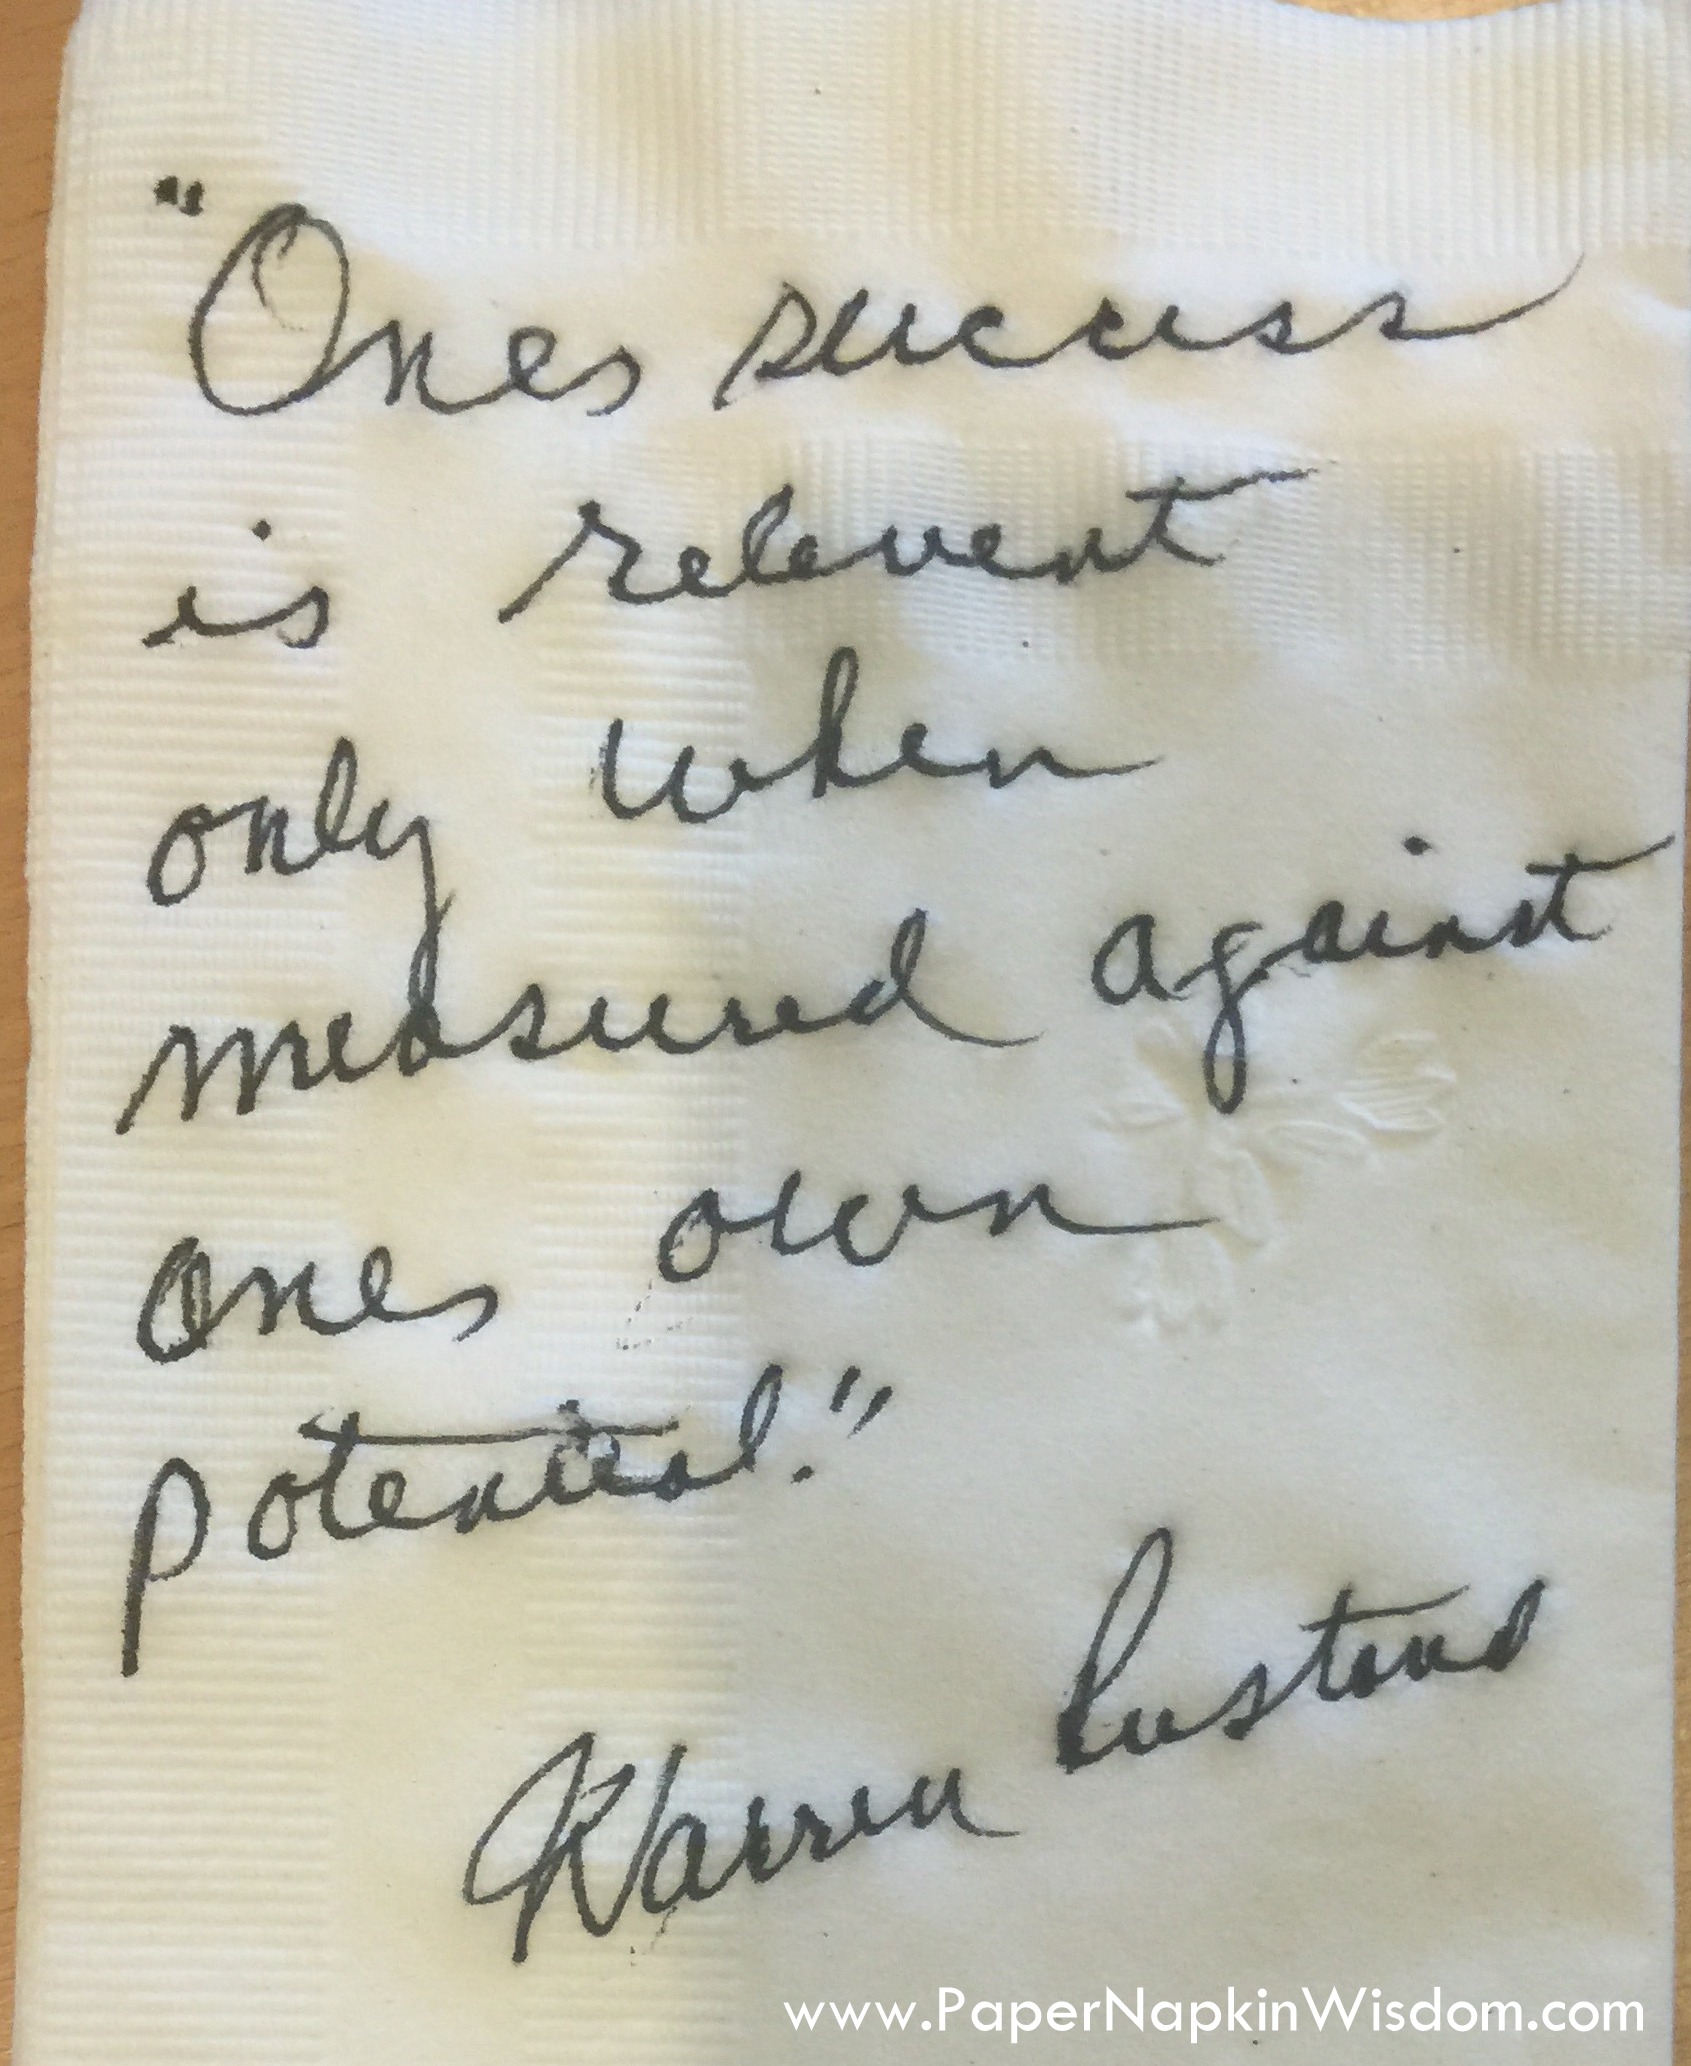 Warren Rustand - Paper Napkin Wisdom